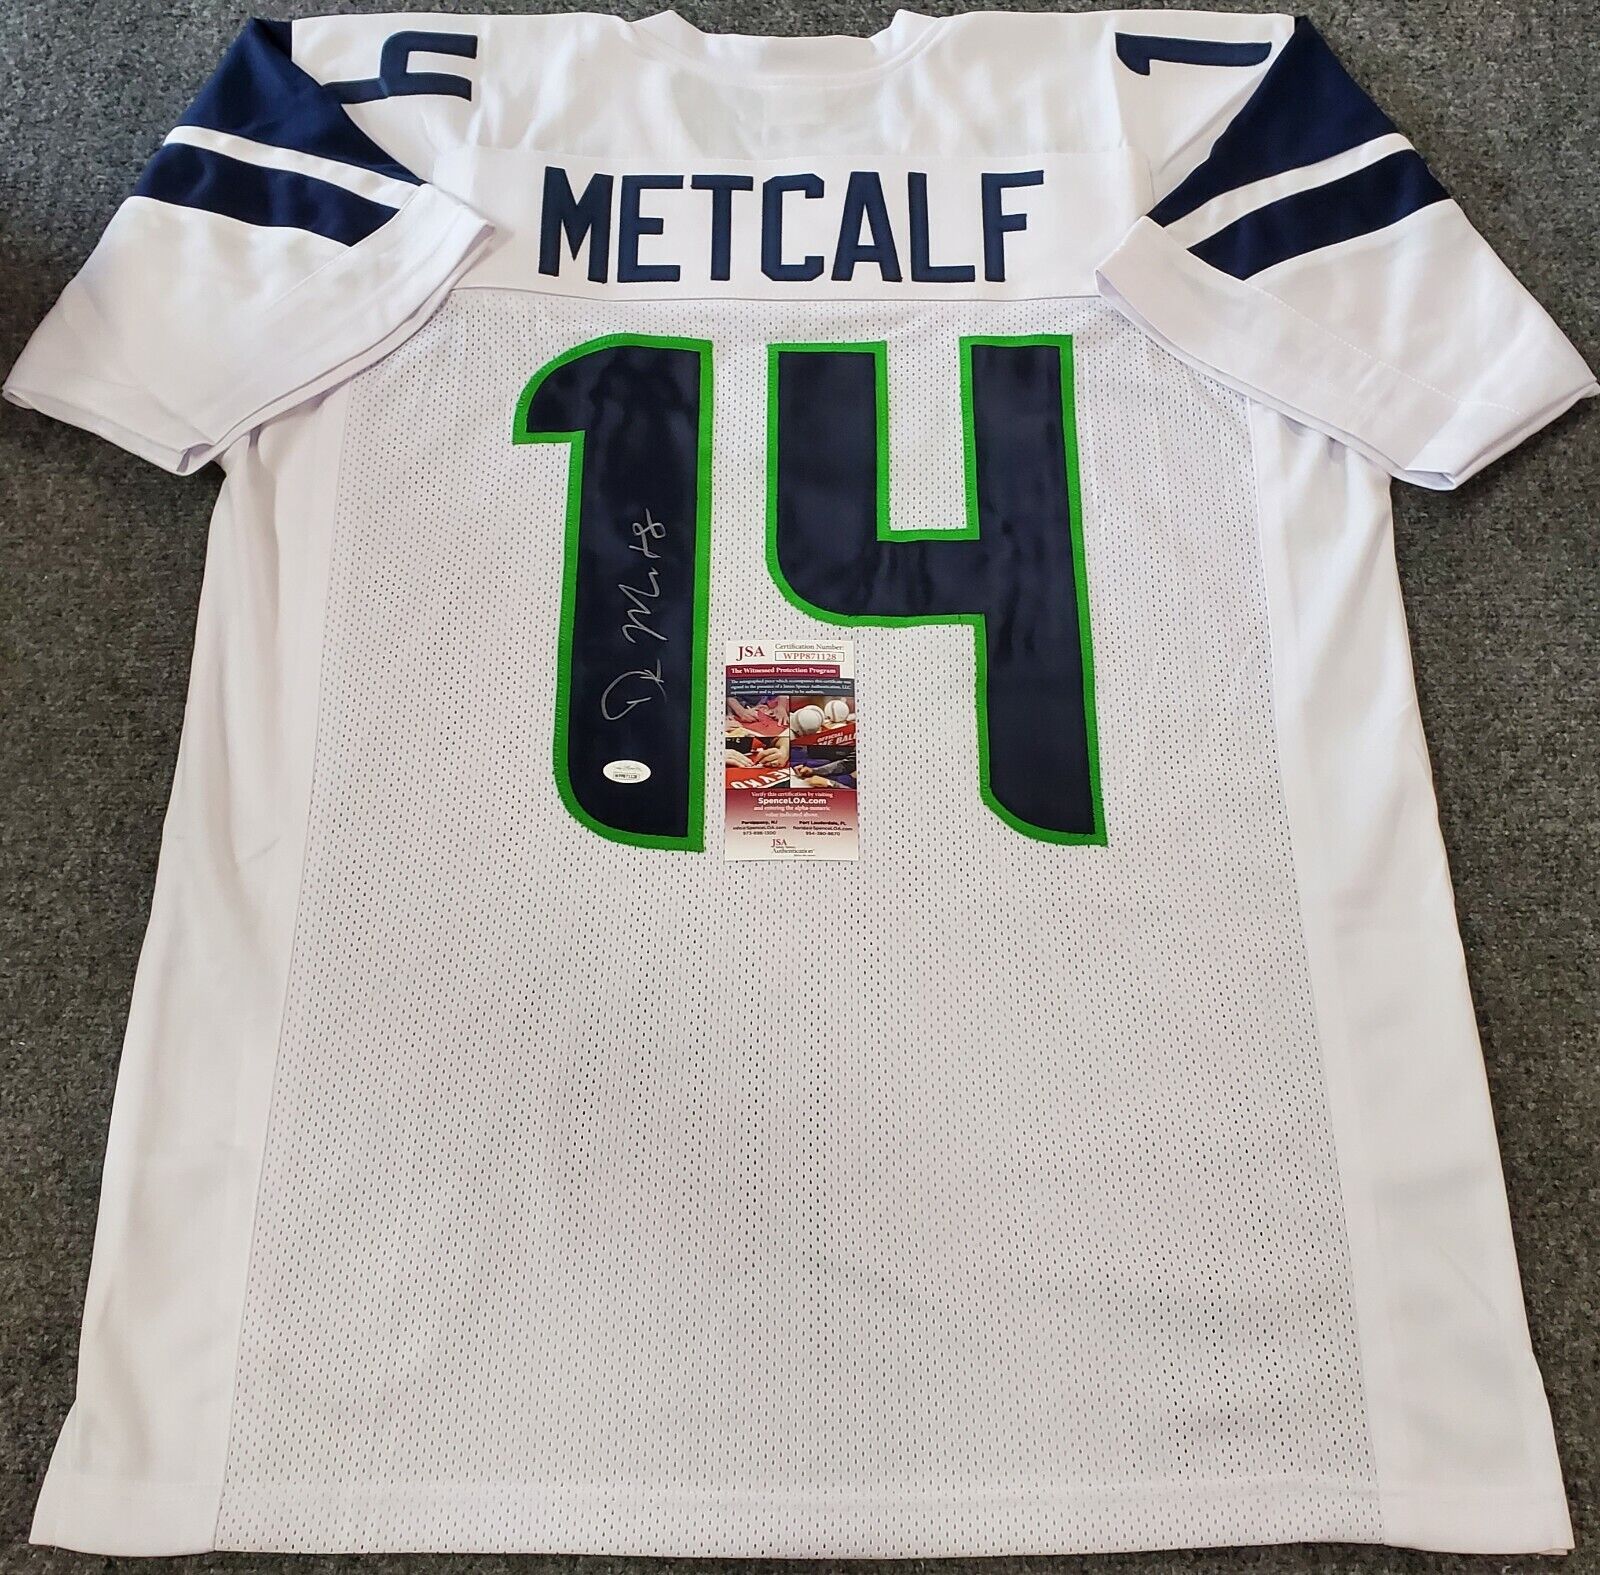 DK Metcalf Signed Seattle Seahawks Jersey JSA Hologram